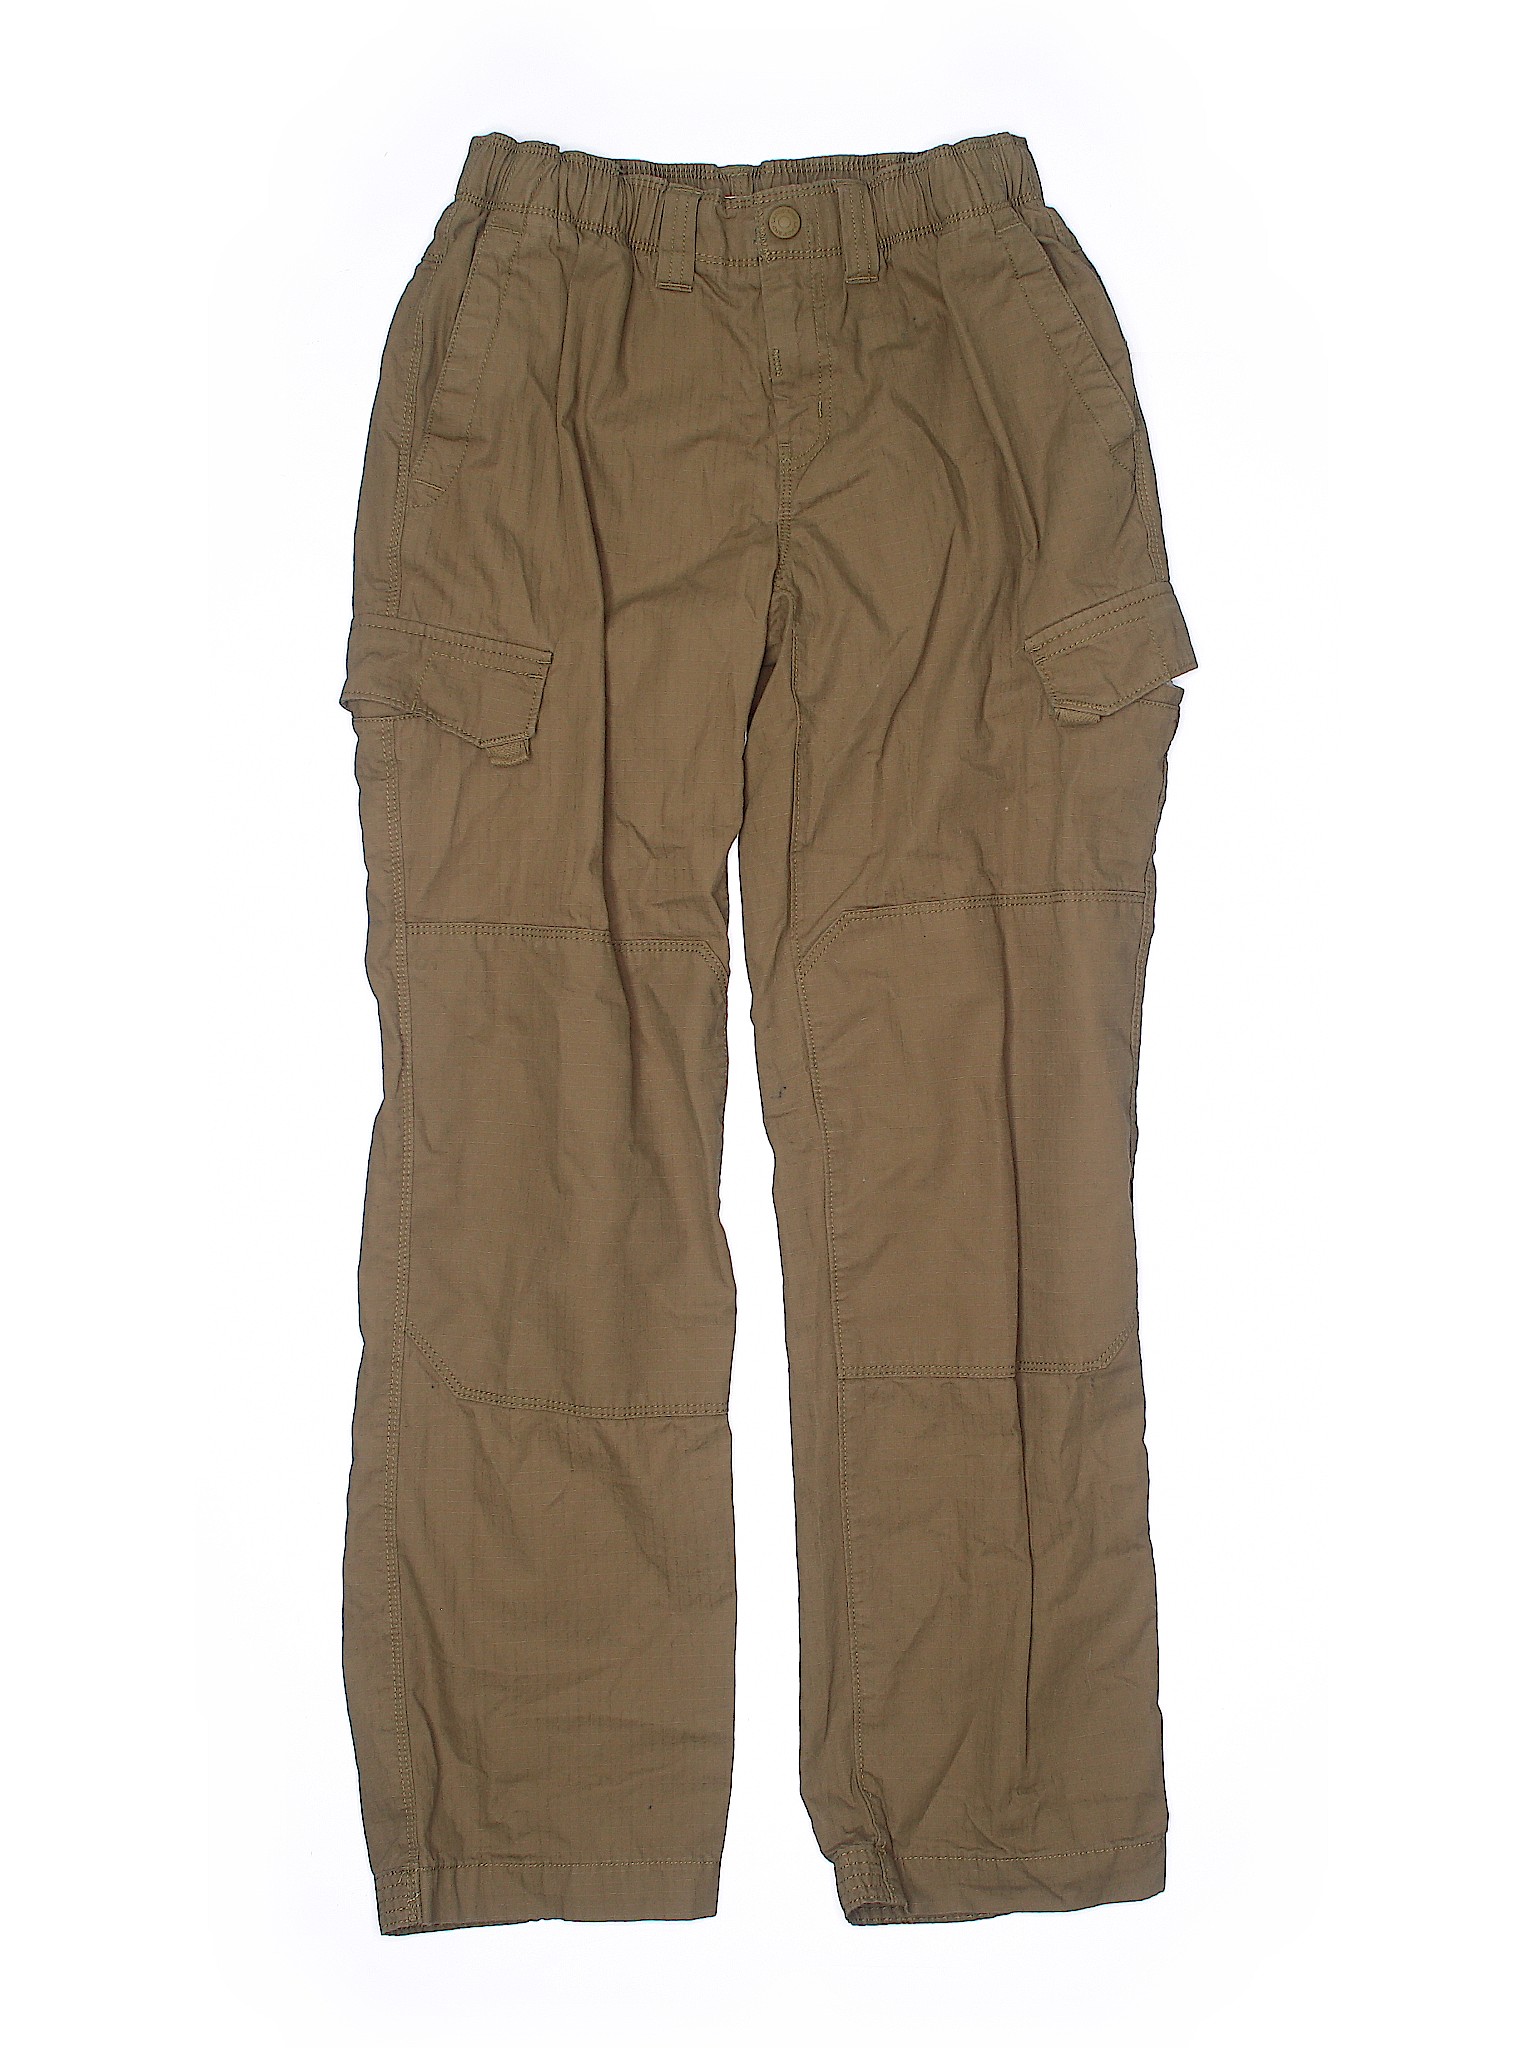 Lands' End Boys Green Cargo Pants 14 | eBay